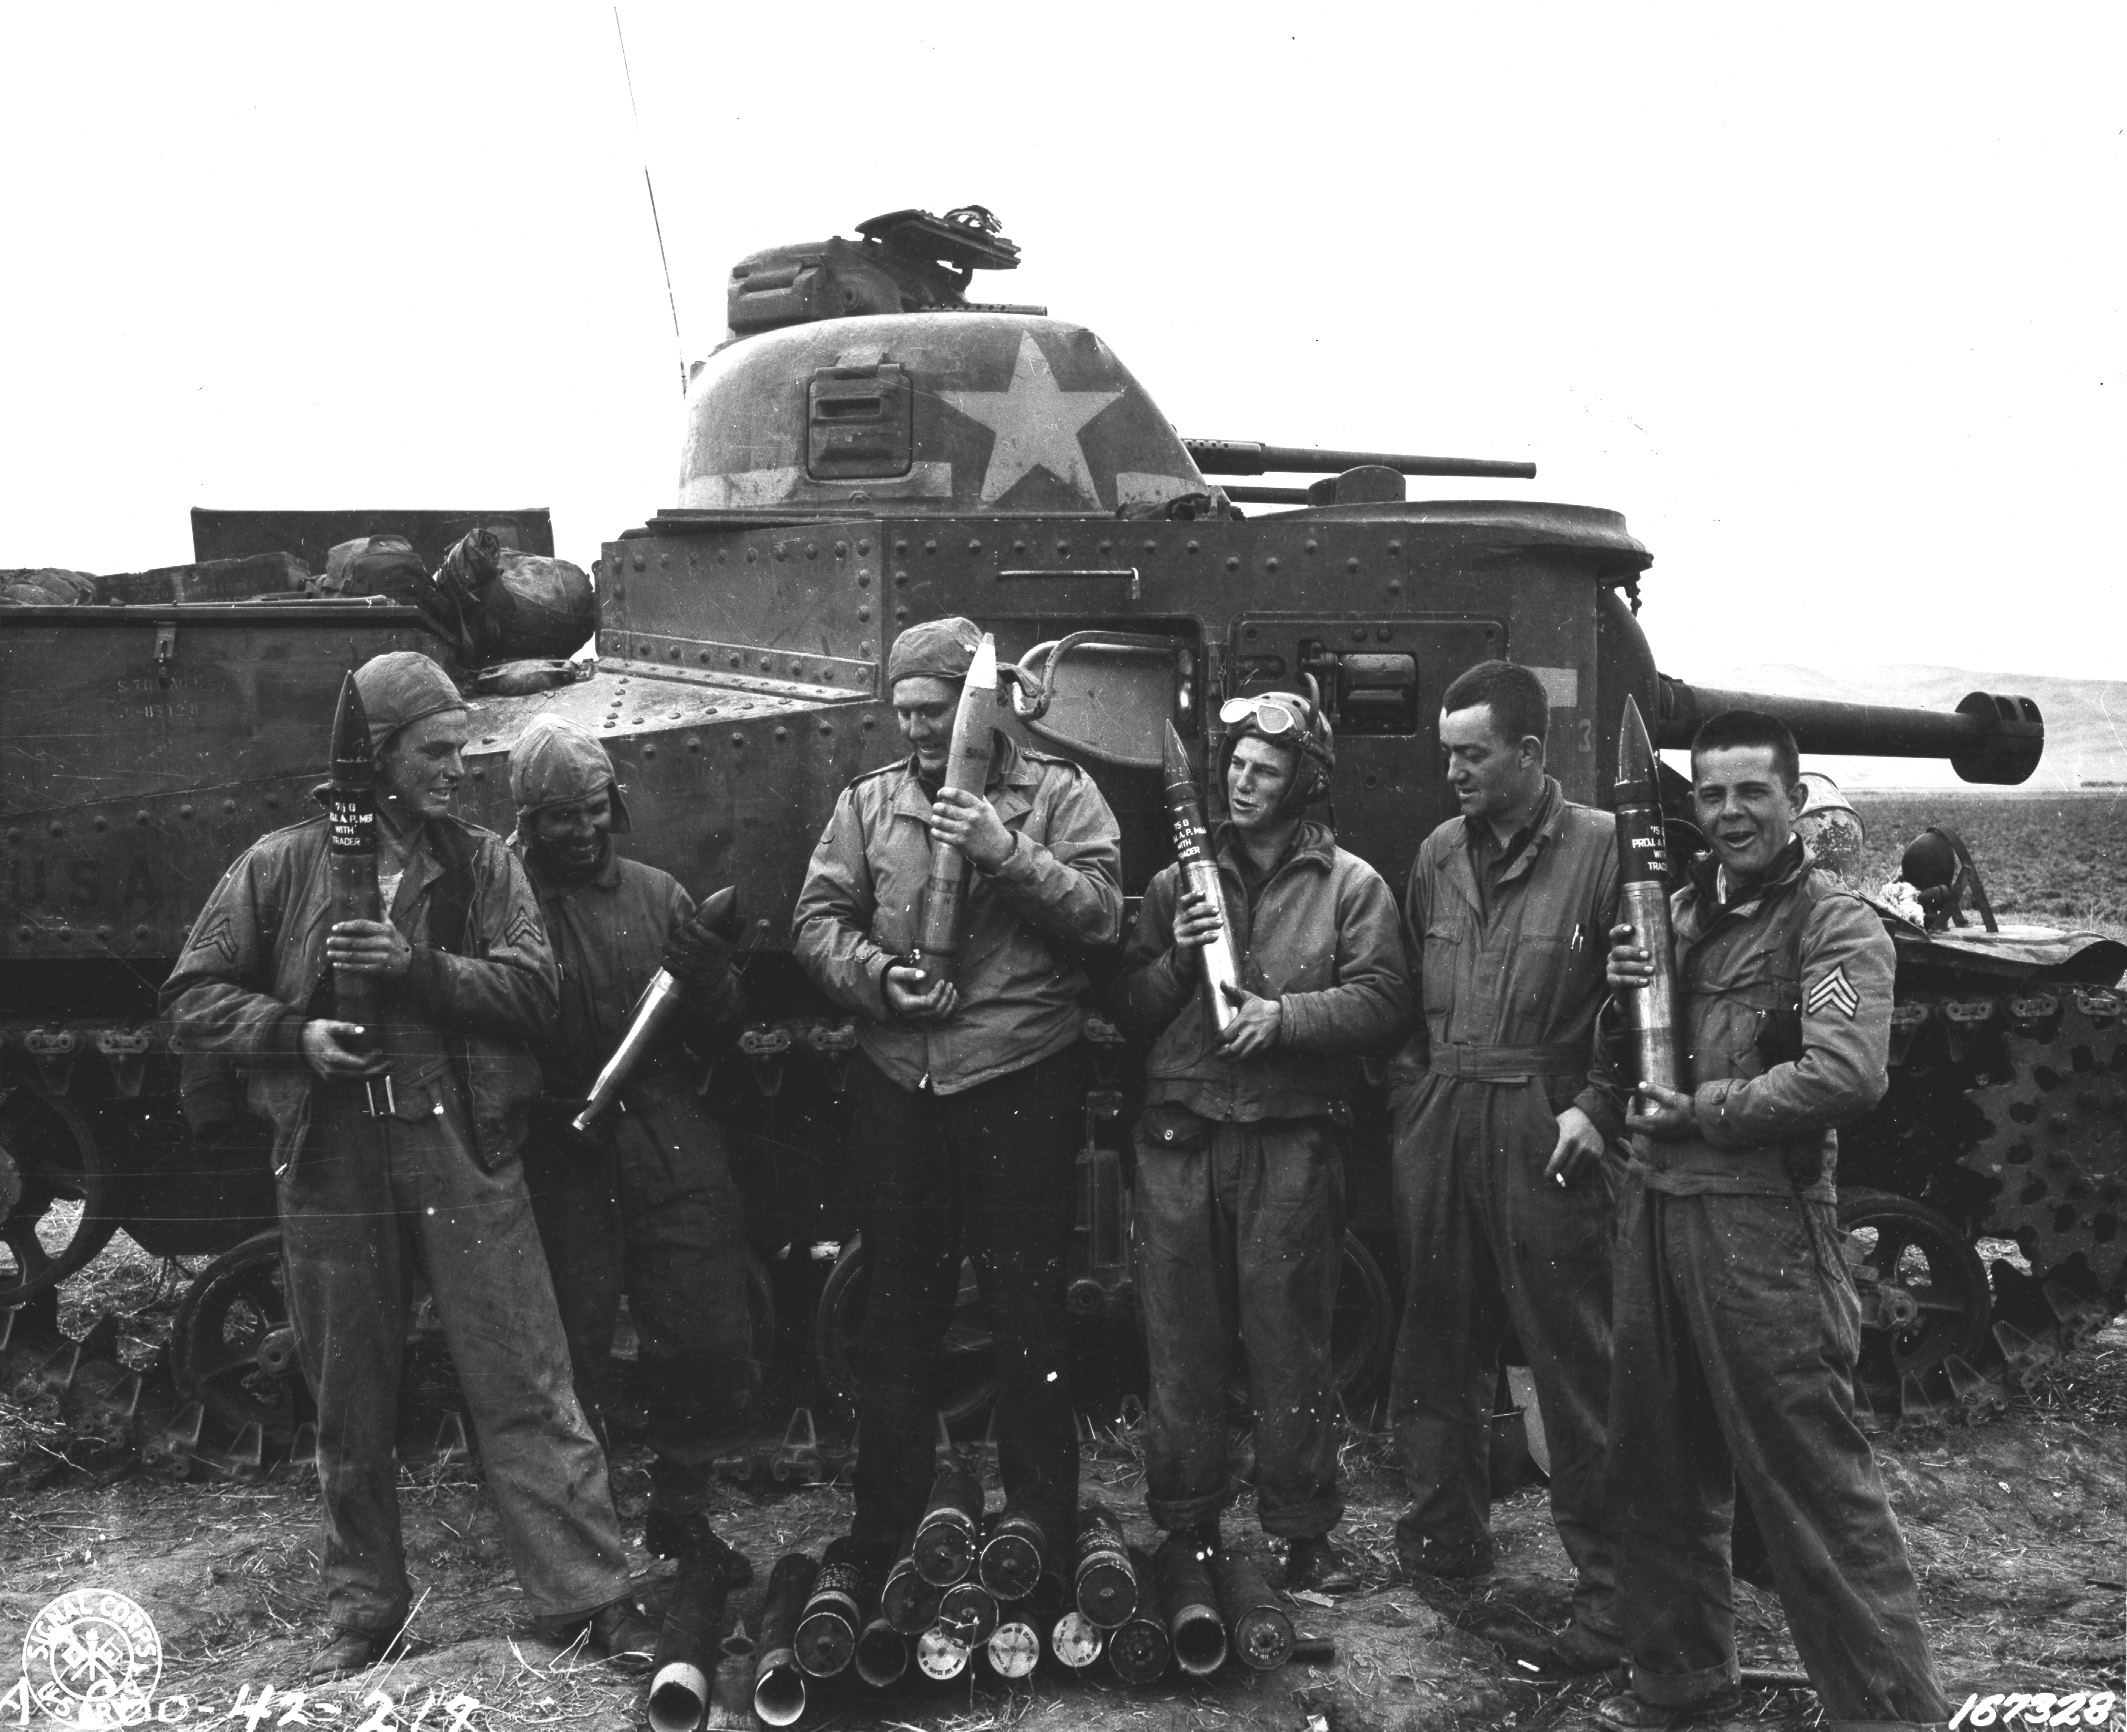 M3 medium tank number 309490 of D Company, 2nd Battalion, 13th Armored Regiment, US 1st Division at Souk el Arba, Tunisia, 23 Nov 1942, photo 3 of 3